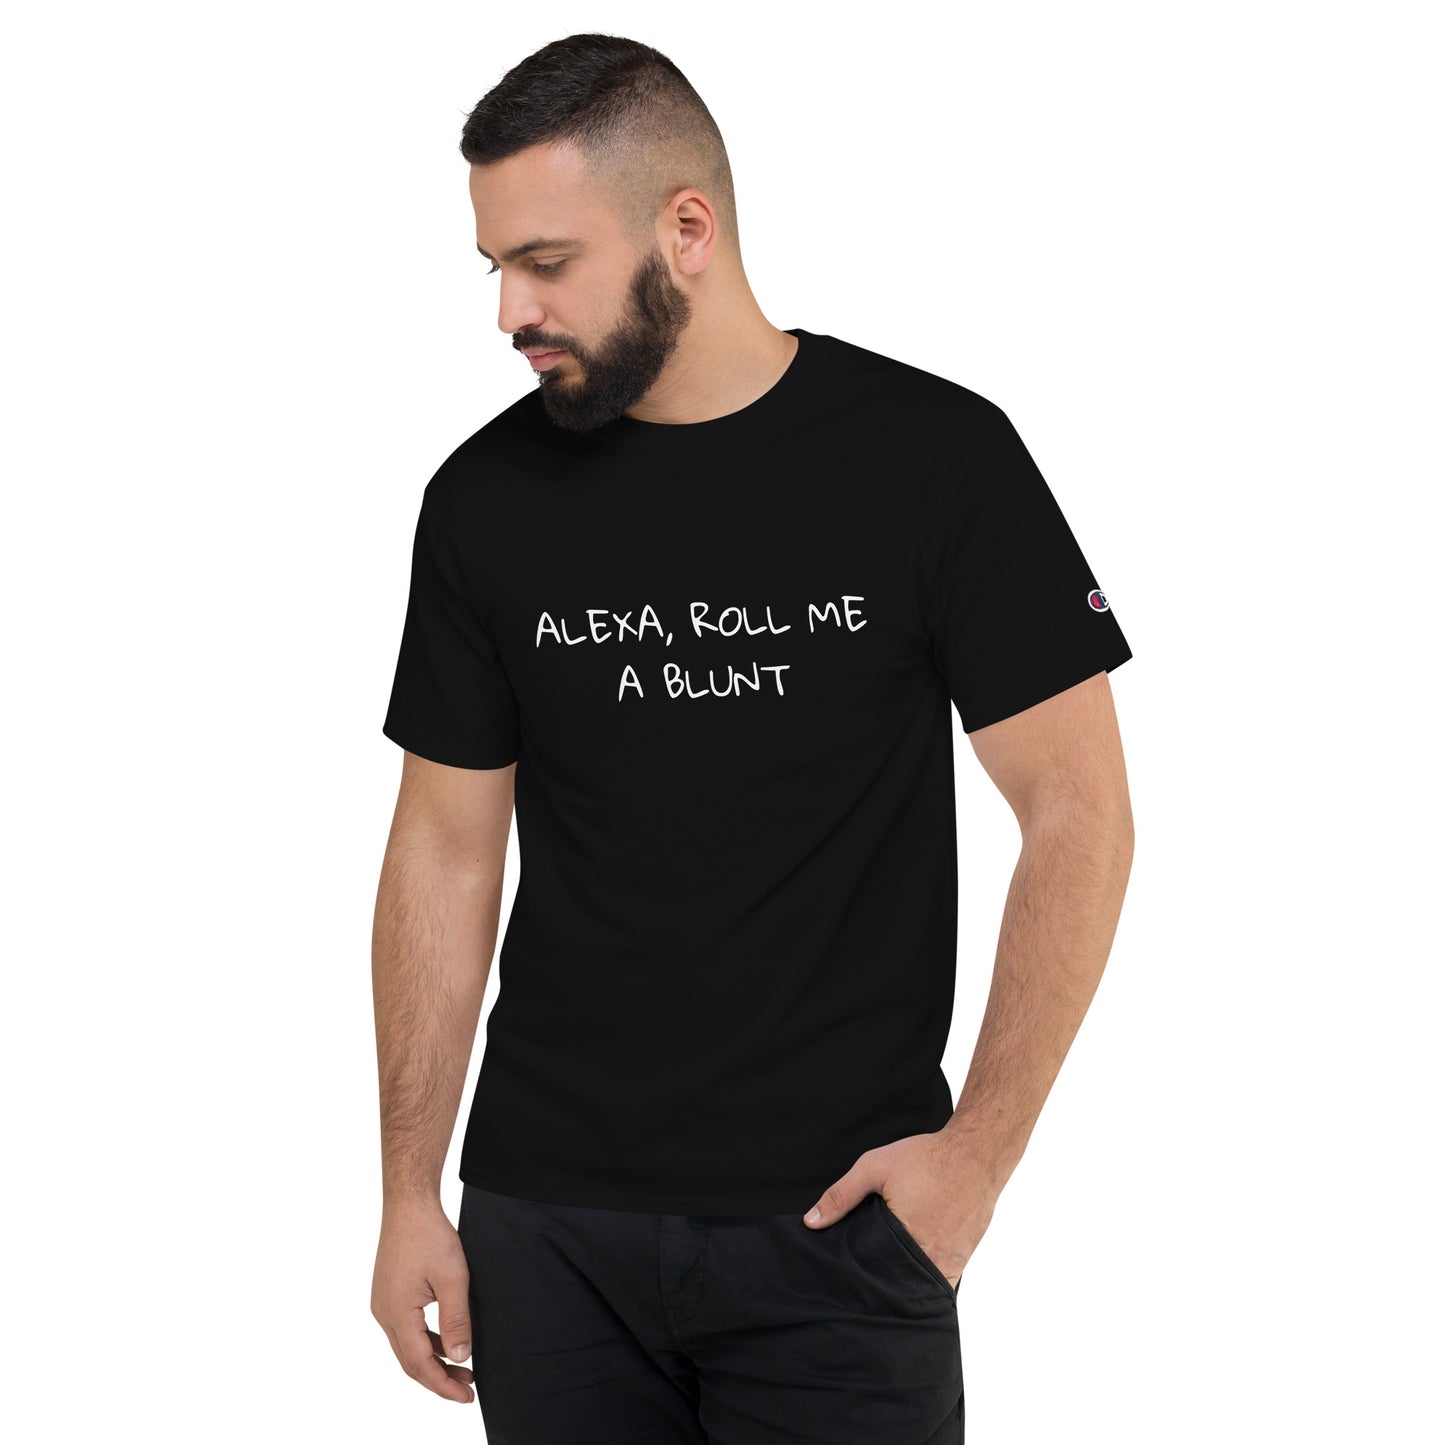 Alexa, Roll Champion T-Shirt